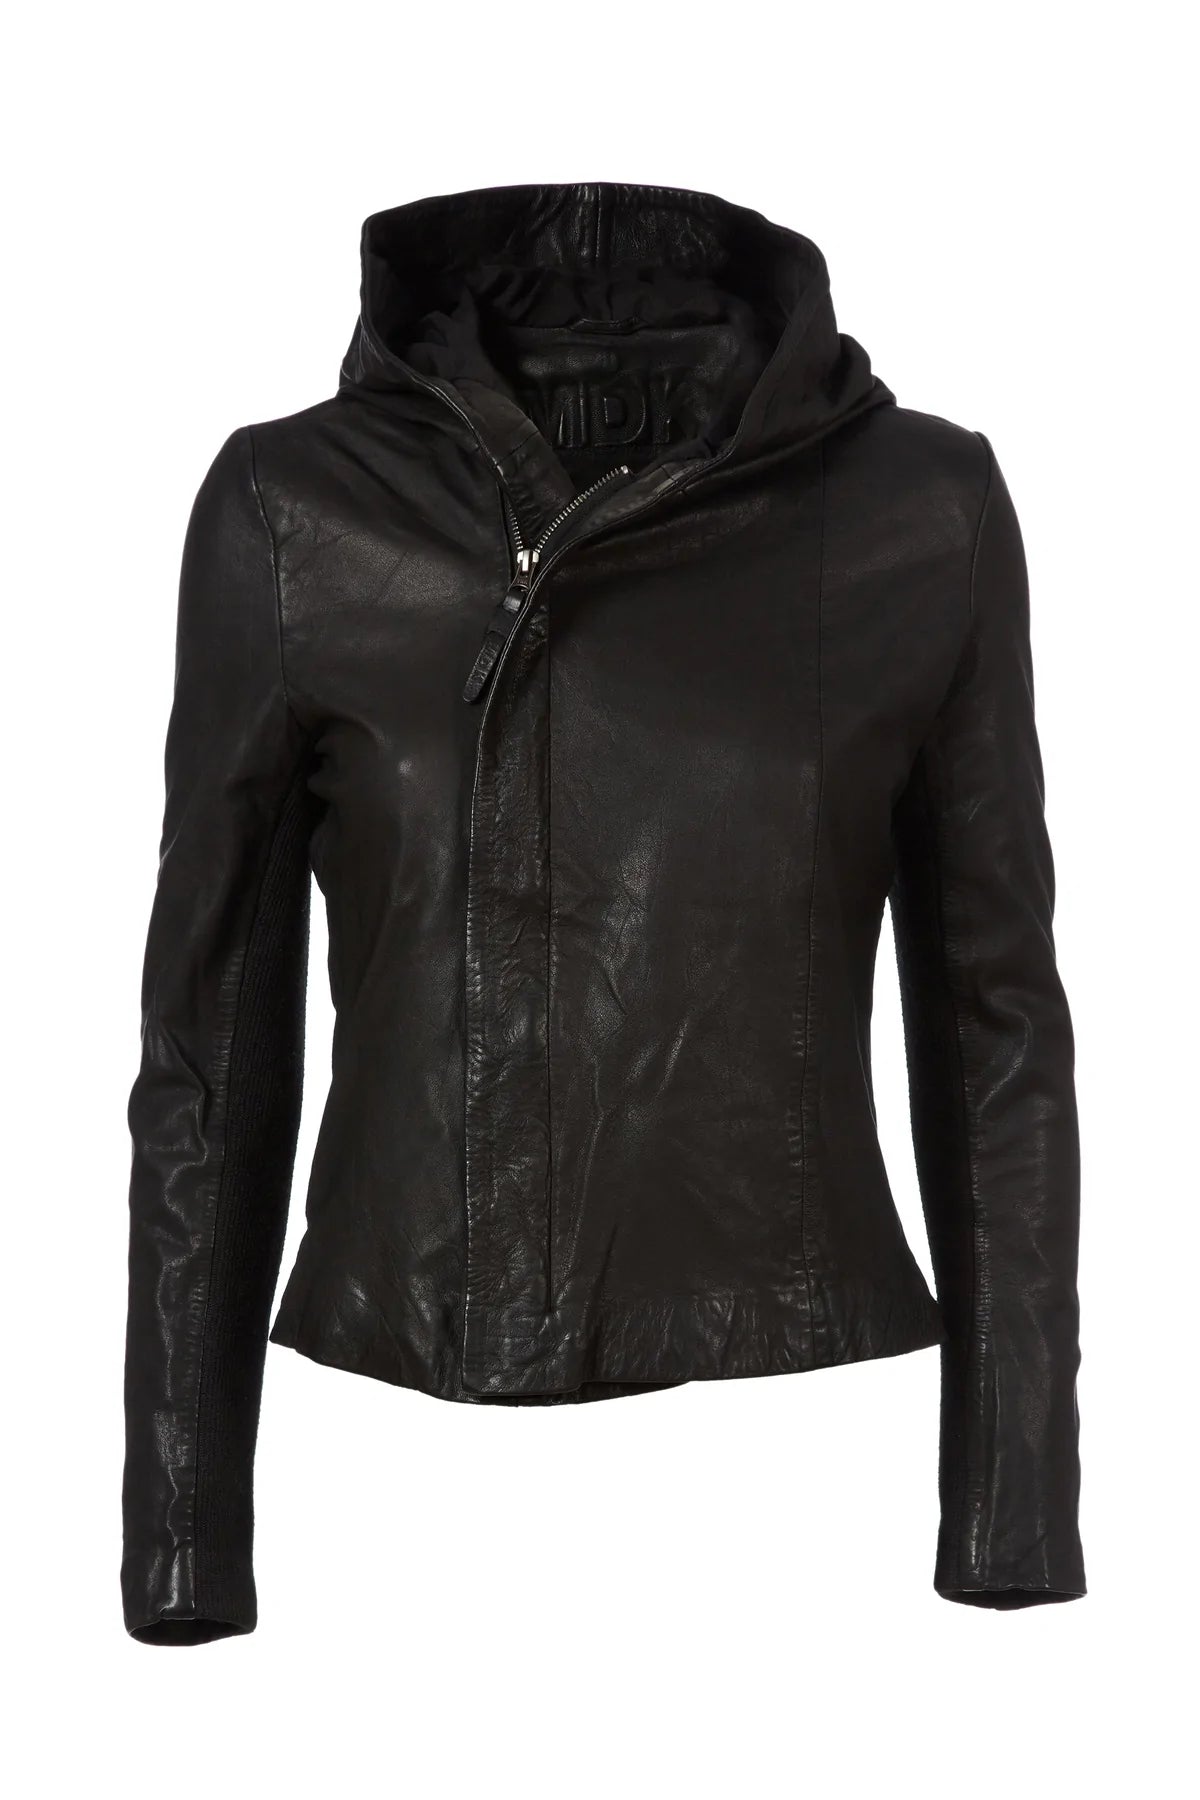 MDK Stine Hooded Leather Jacket Black